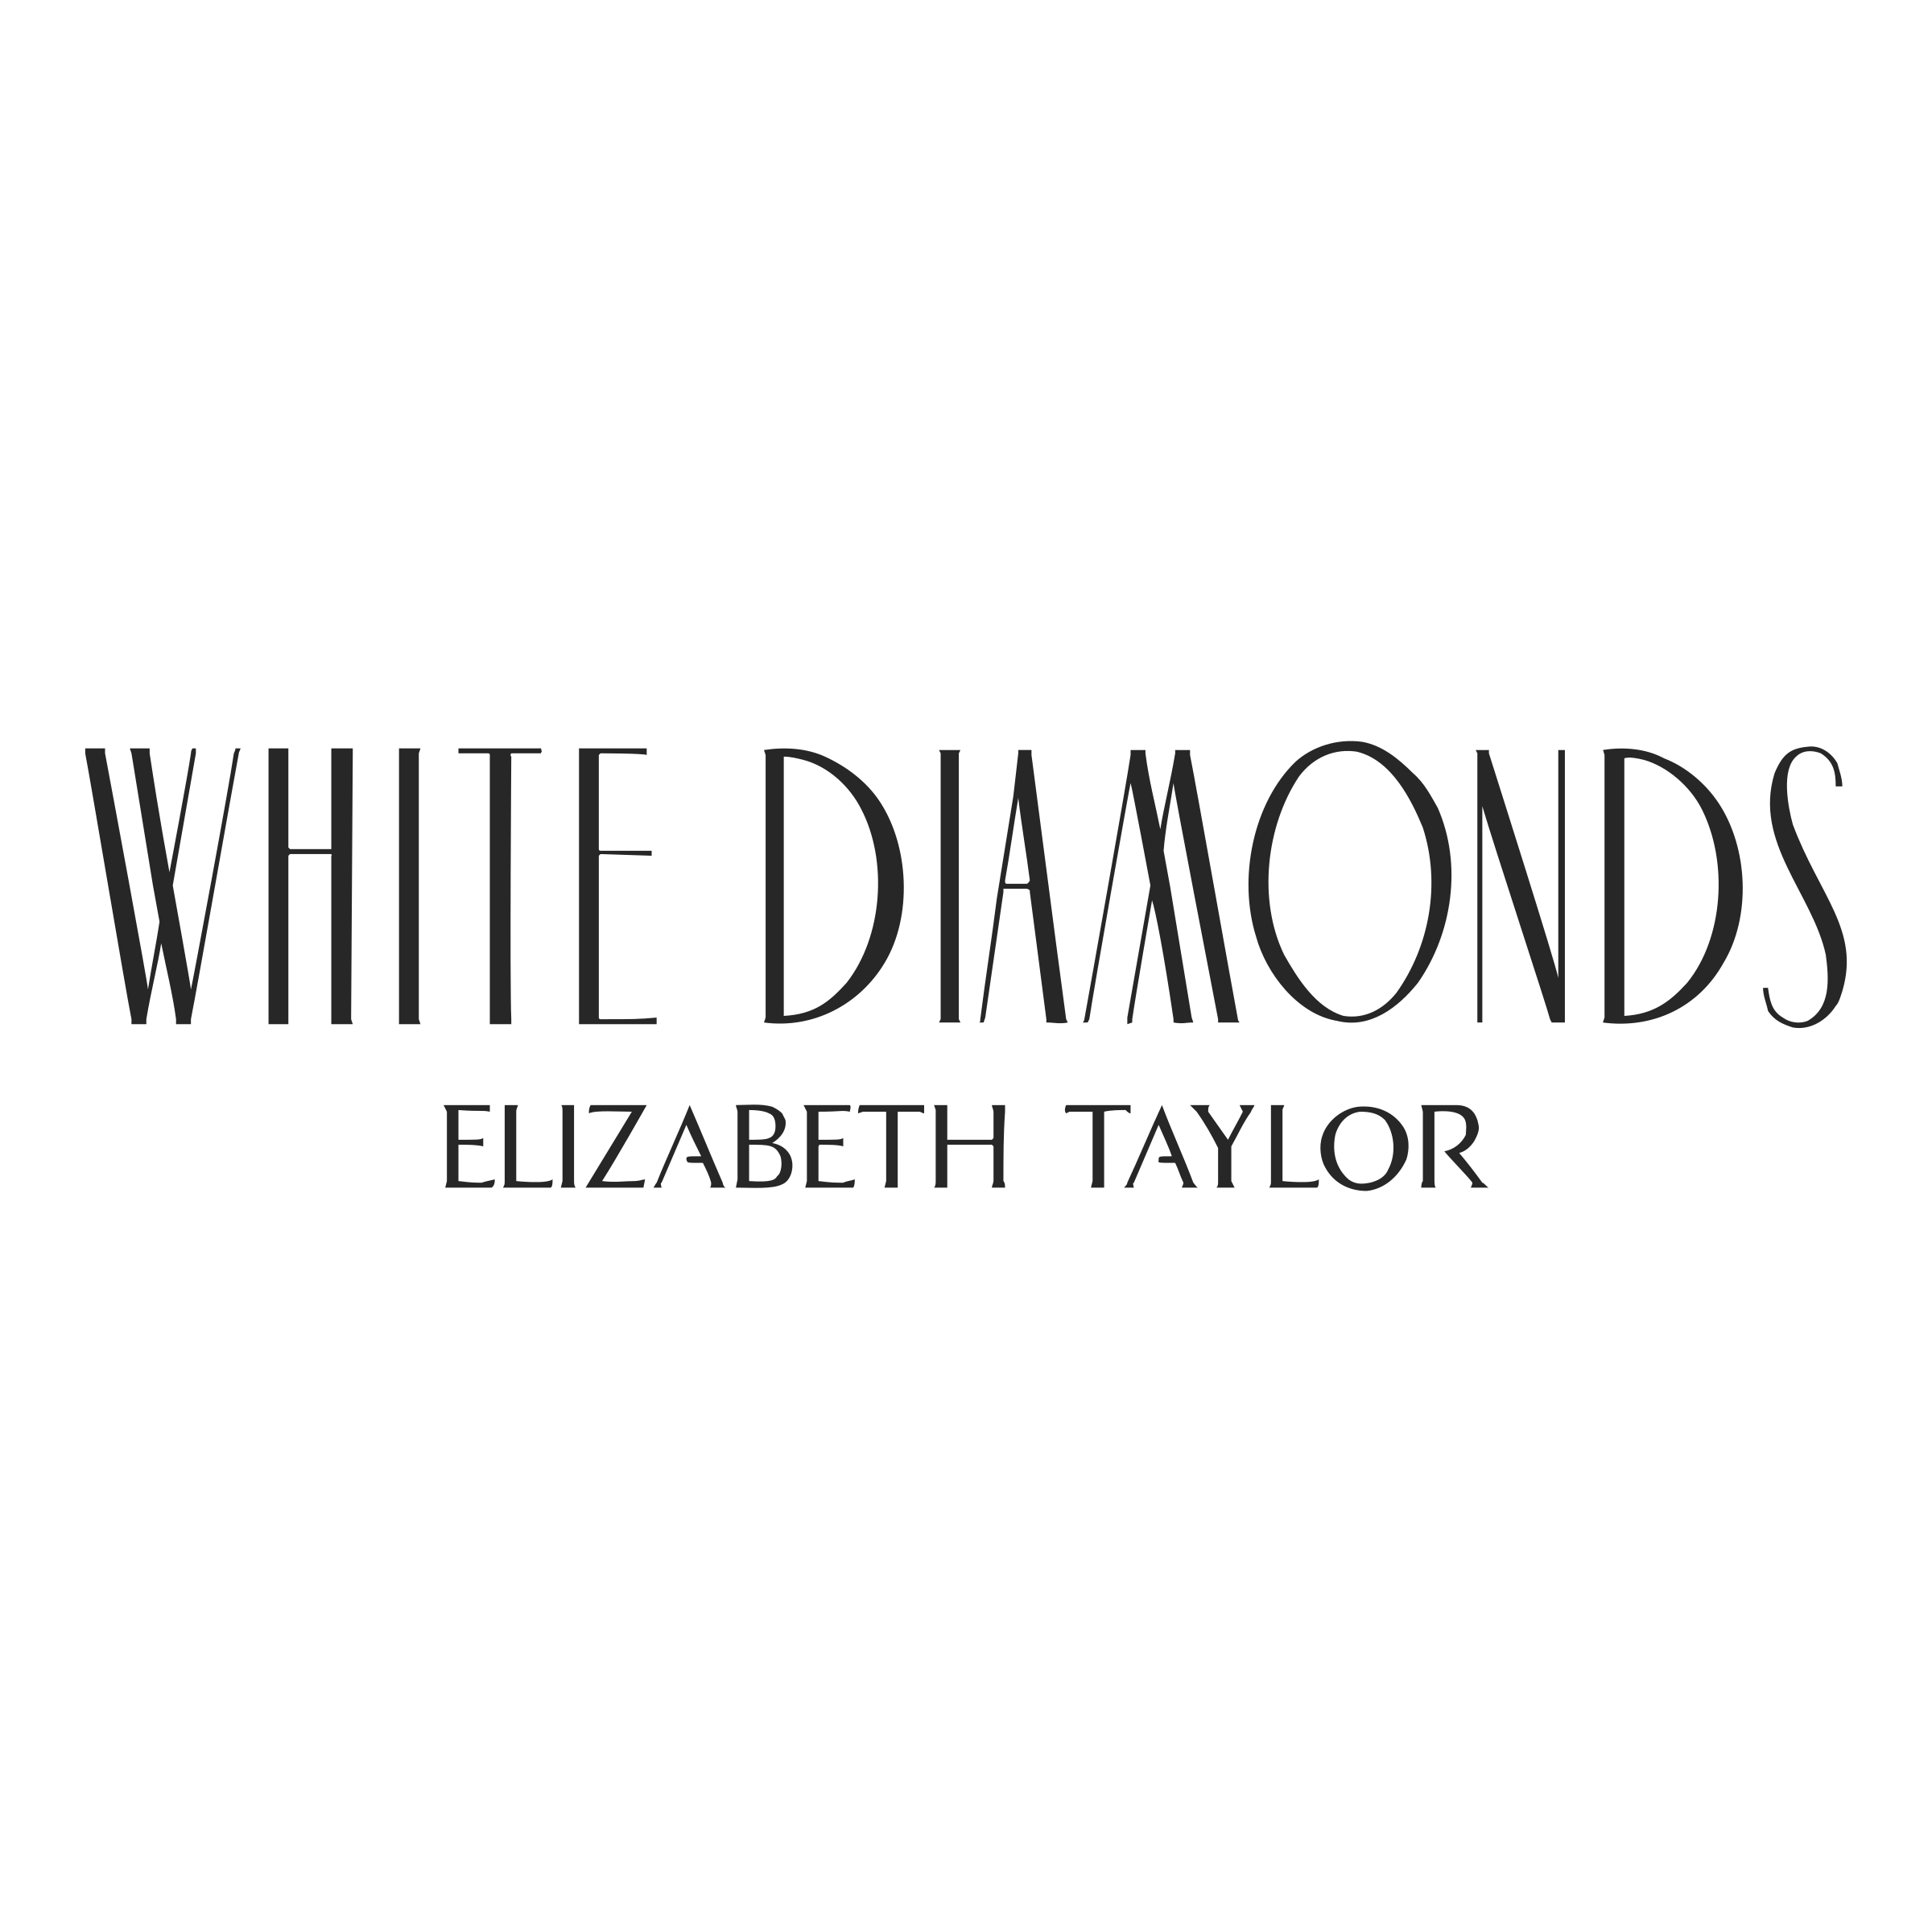 White Diamonds Logo - White Diamonds Logo PNG Transparent & SVG Vector - Freebie Supply